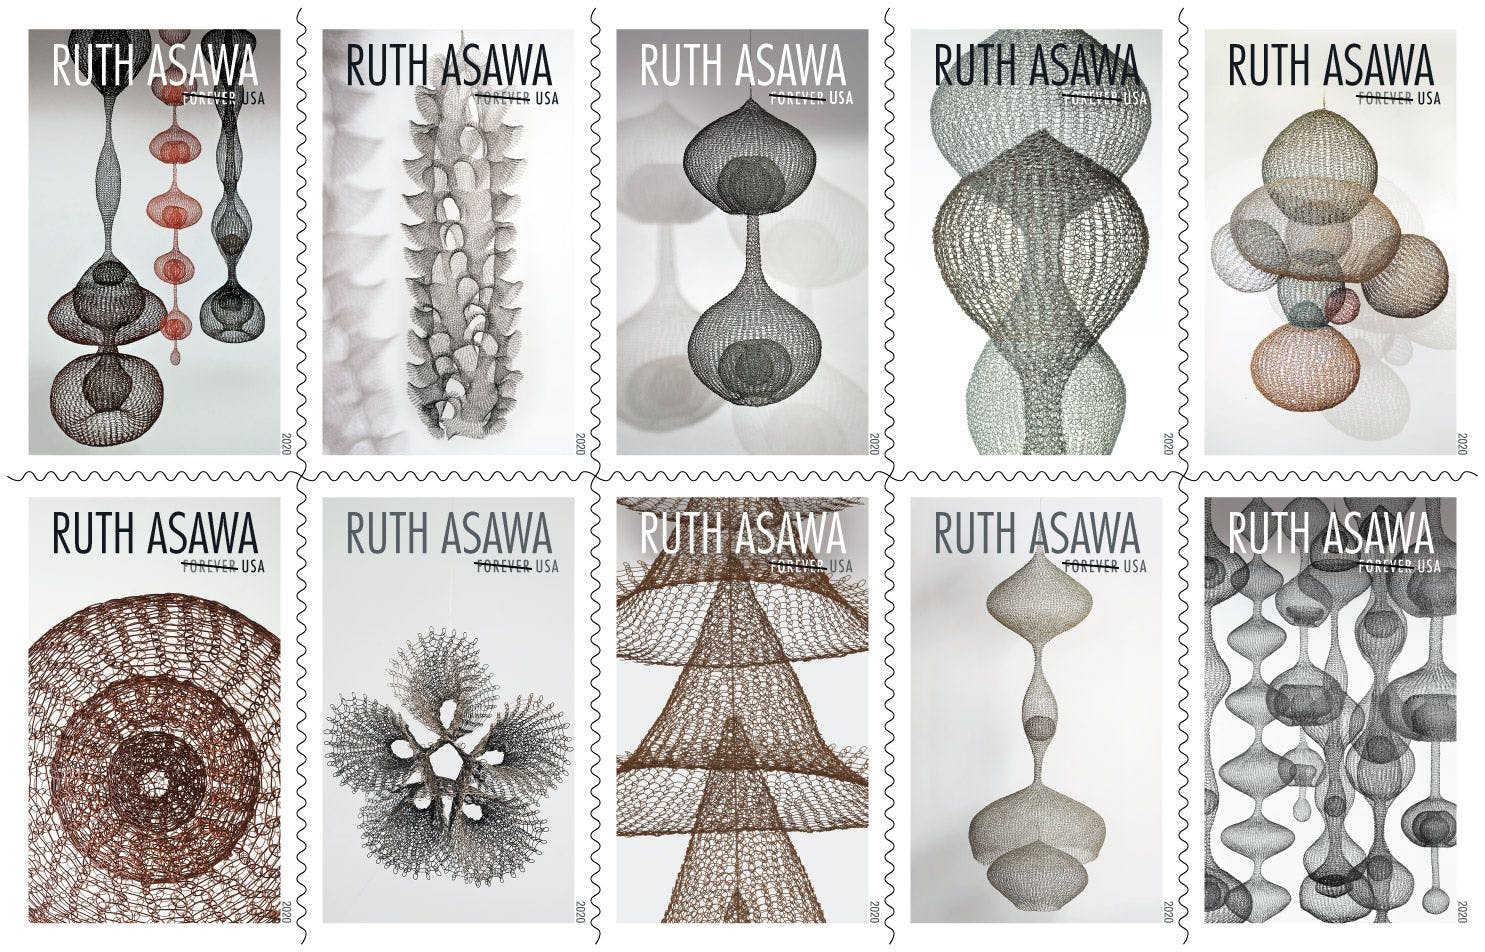 Ruth Asawa united states postal service stamp set, dated 2020.